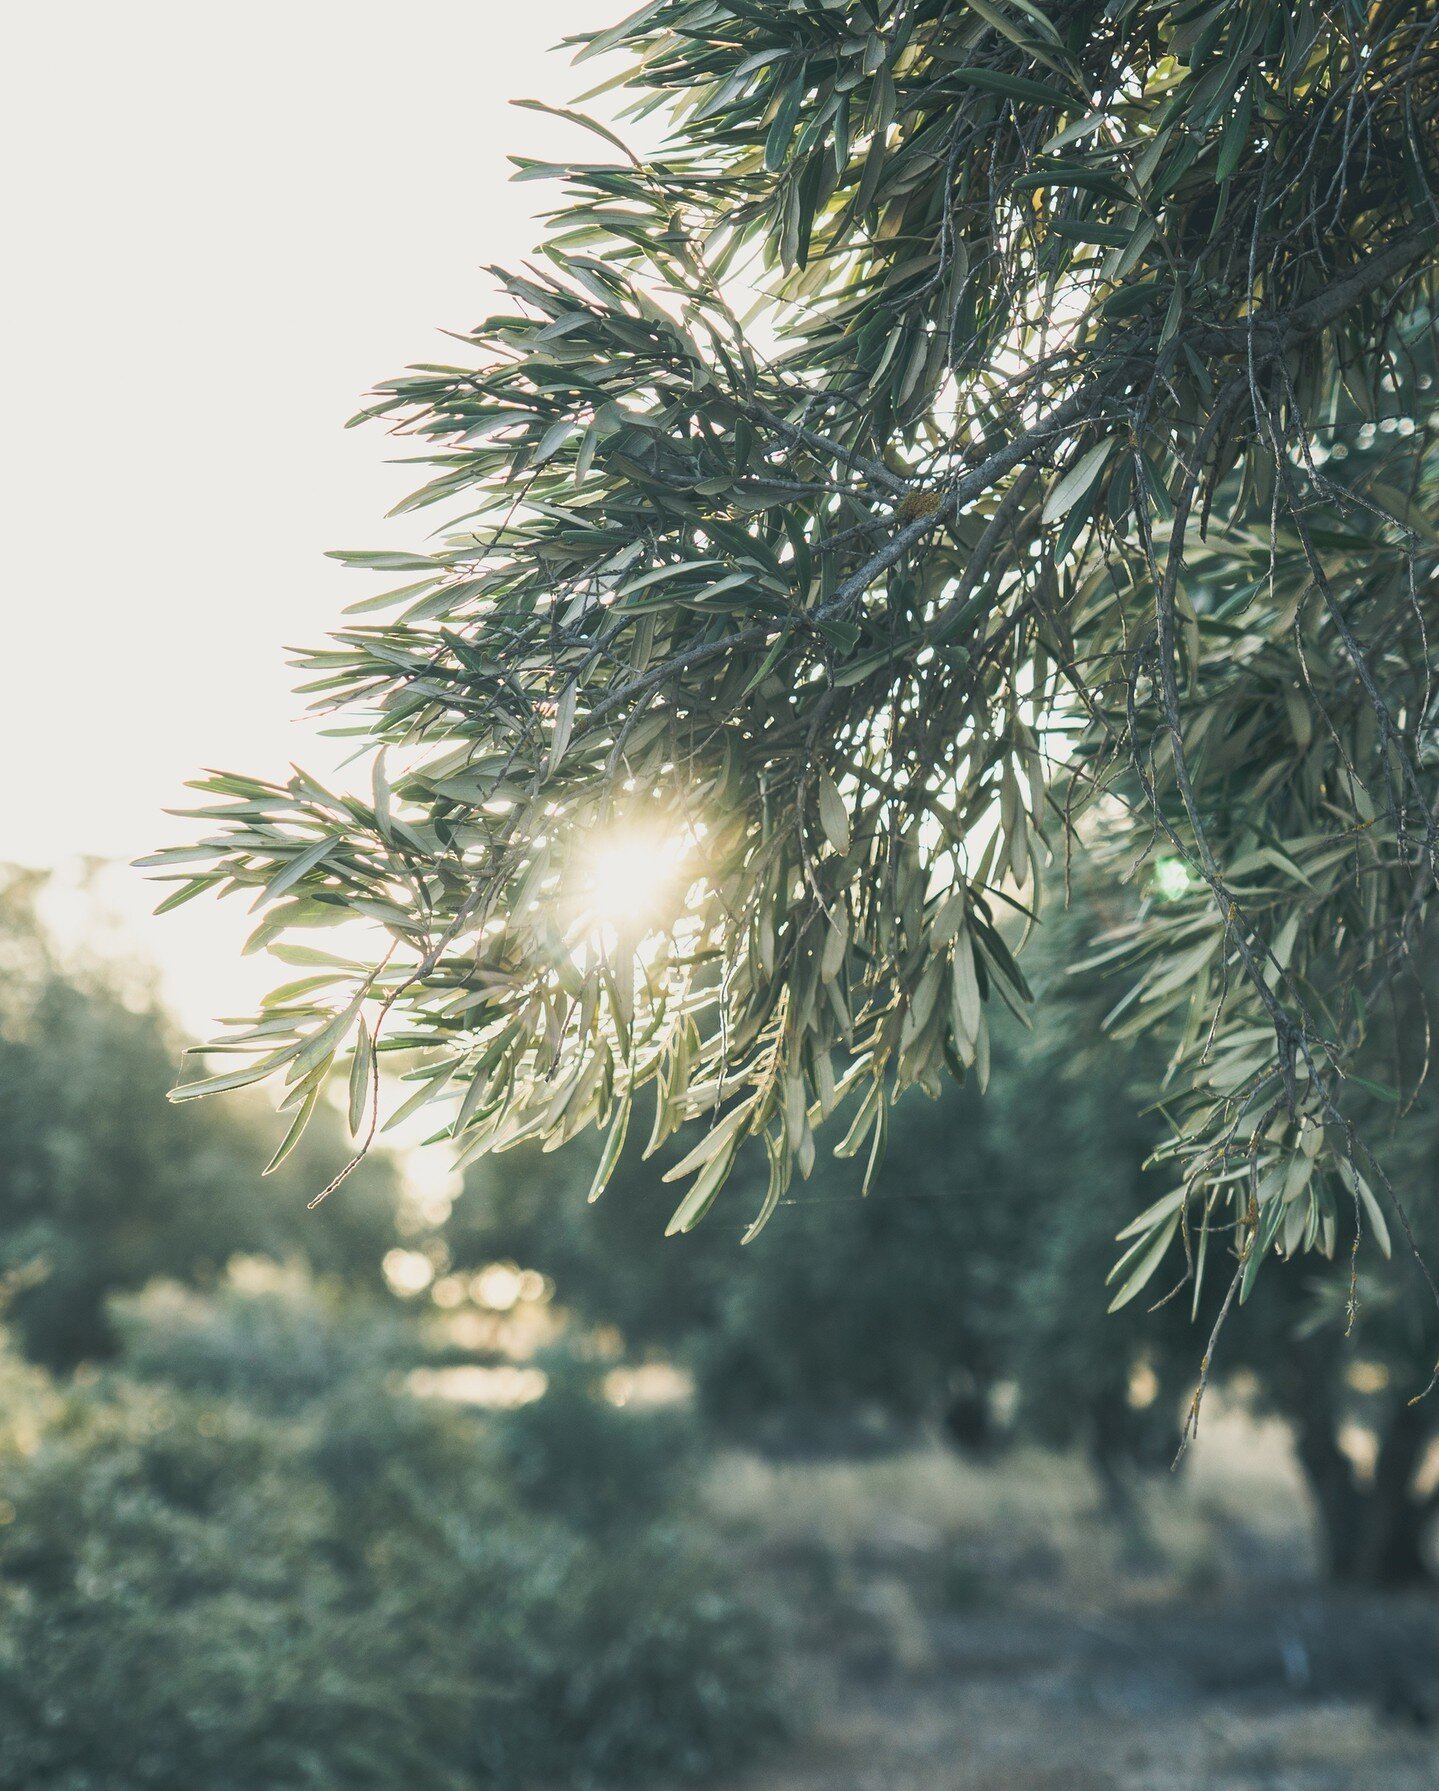 💚⁠
⁠
📸 @sagacreative.co⁠
⁠
#gardengrowntrees #morningtonpeninsula #olivetrees #matureolives #olivegrove #exorchardolives  #landscaping #landscapingdesign #landscapedesign #gardendesign #planting #gnarlytree #treetransplanting #landscapedesignideas 